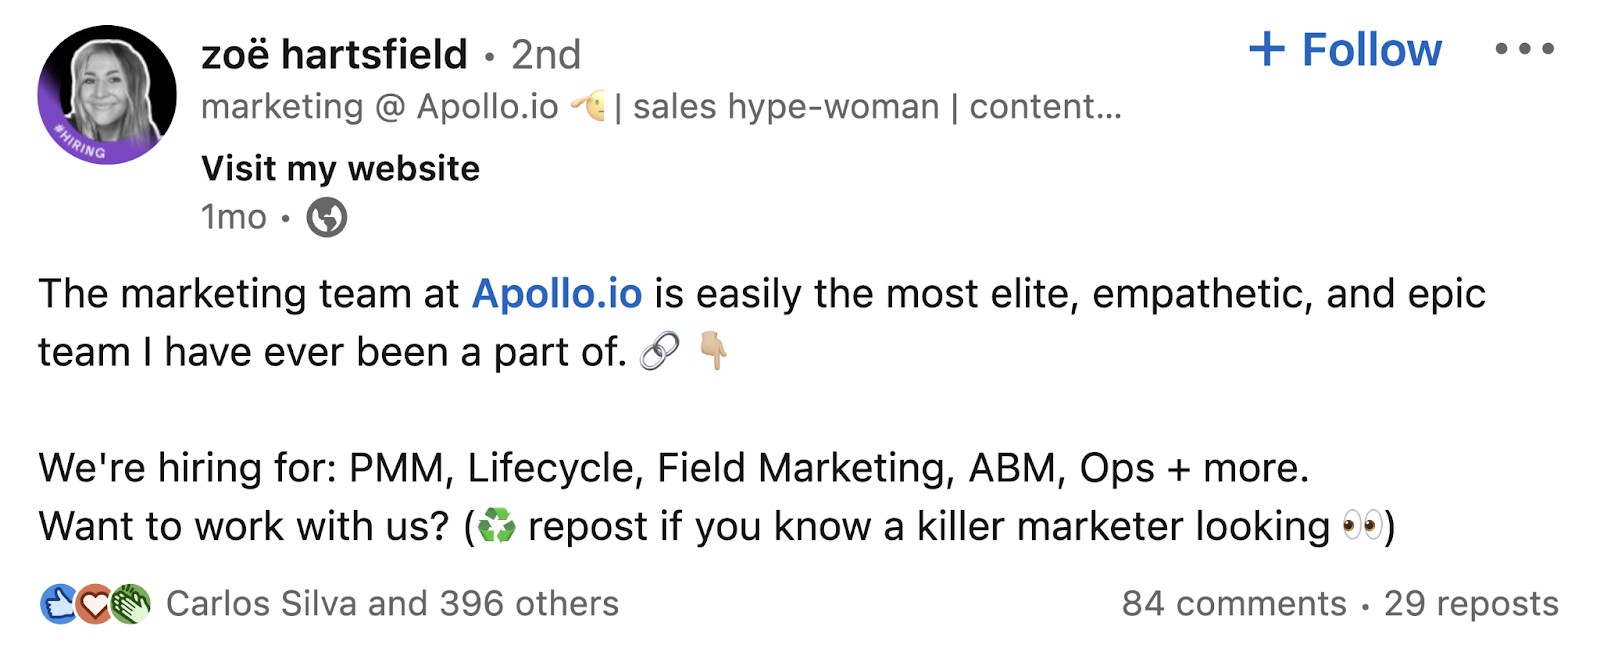 Zoë Hartsfield's LinkedIn post about Apollo.io's marketing team